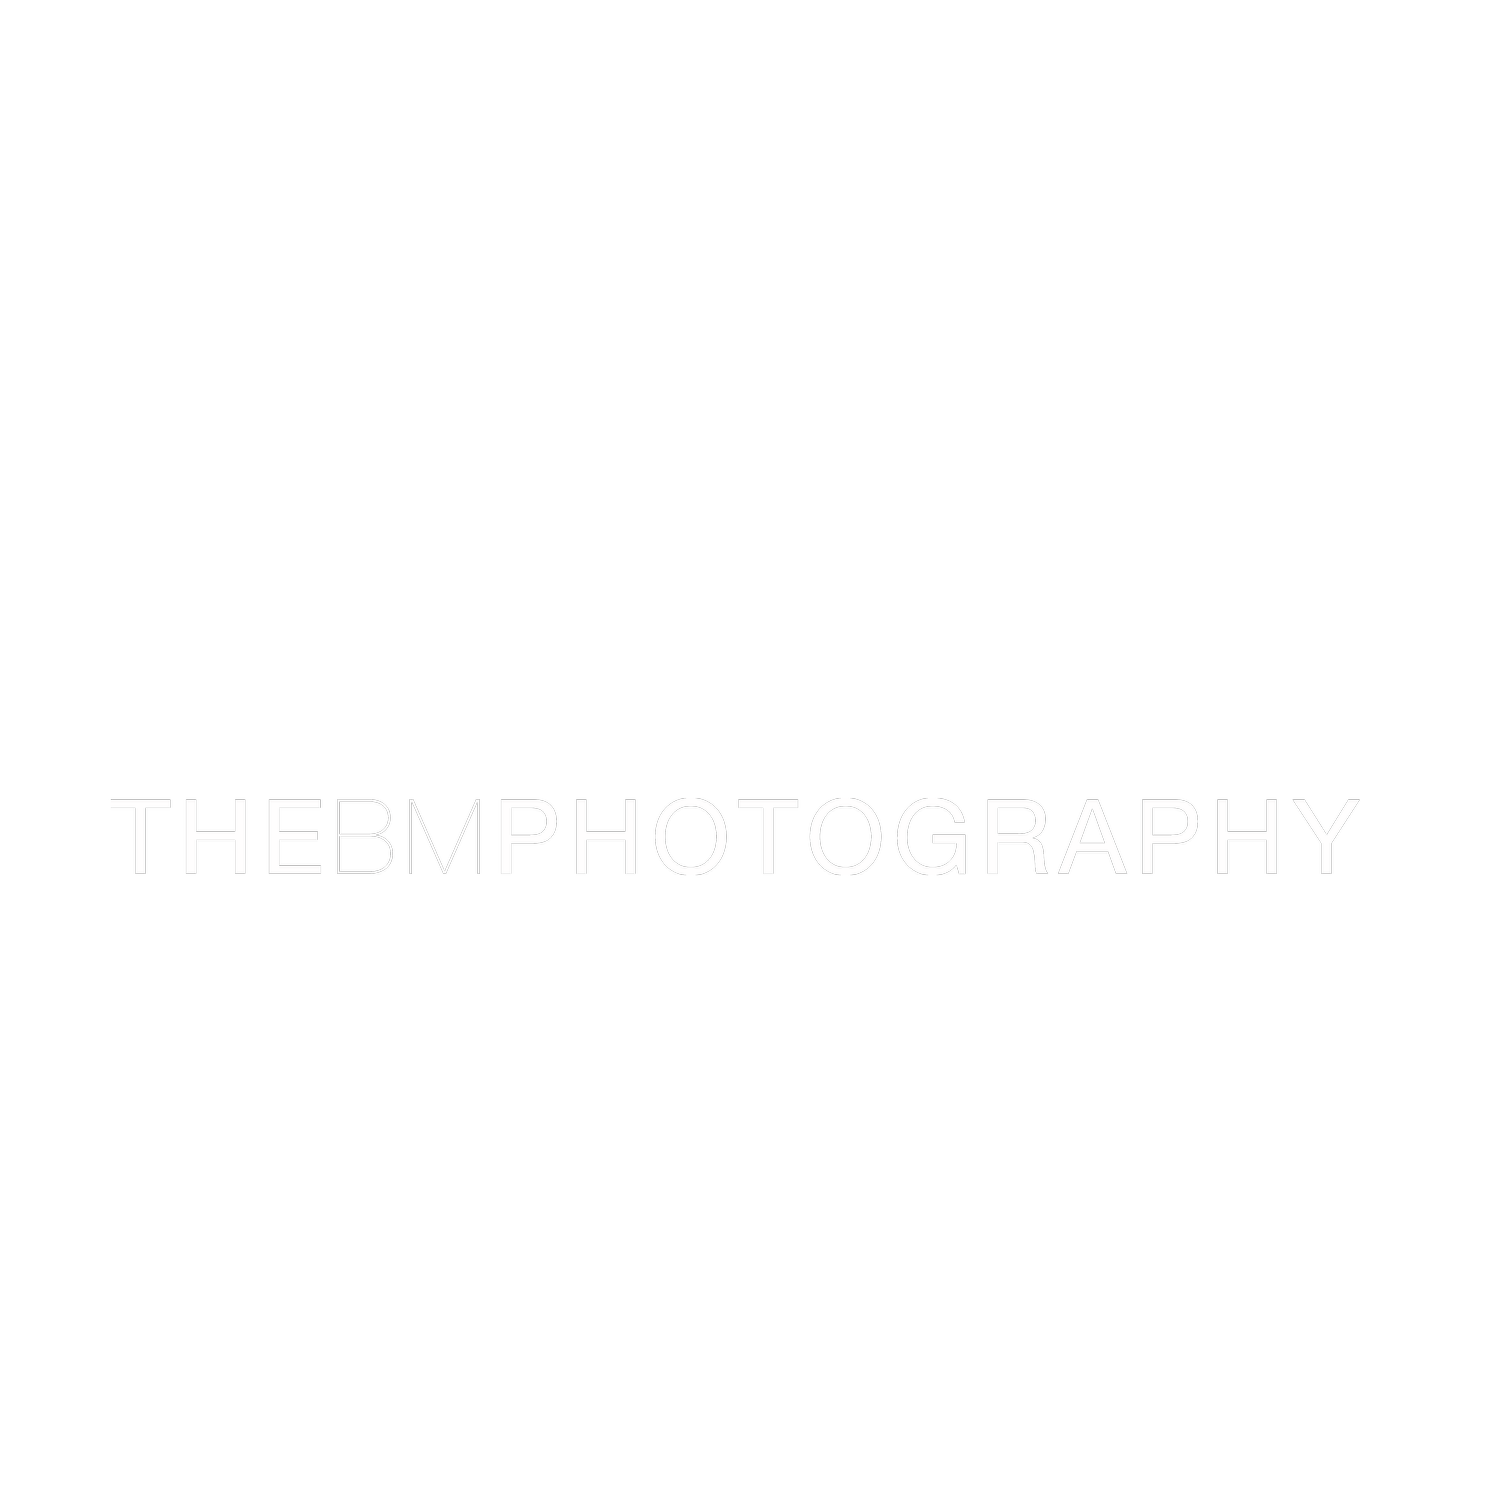 The BM PHOTOGRAPHY